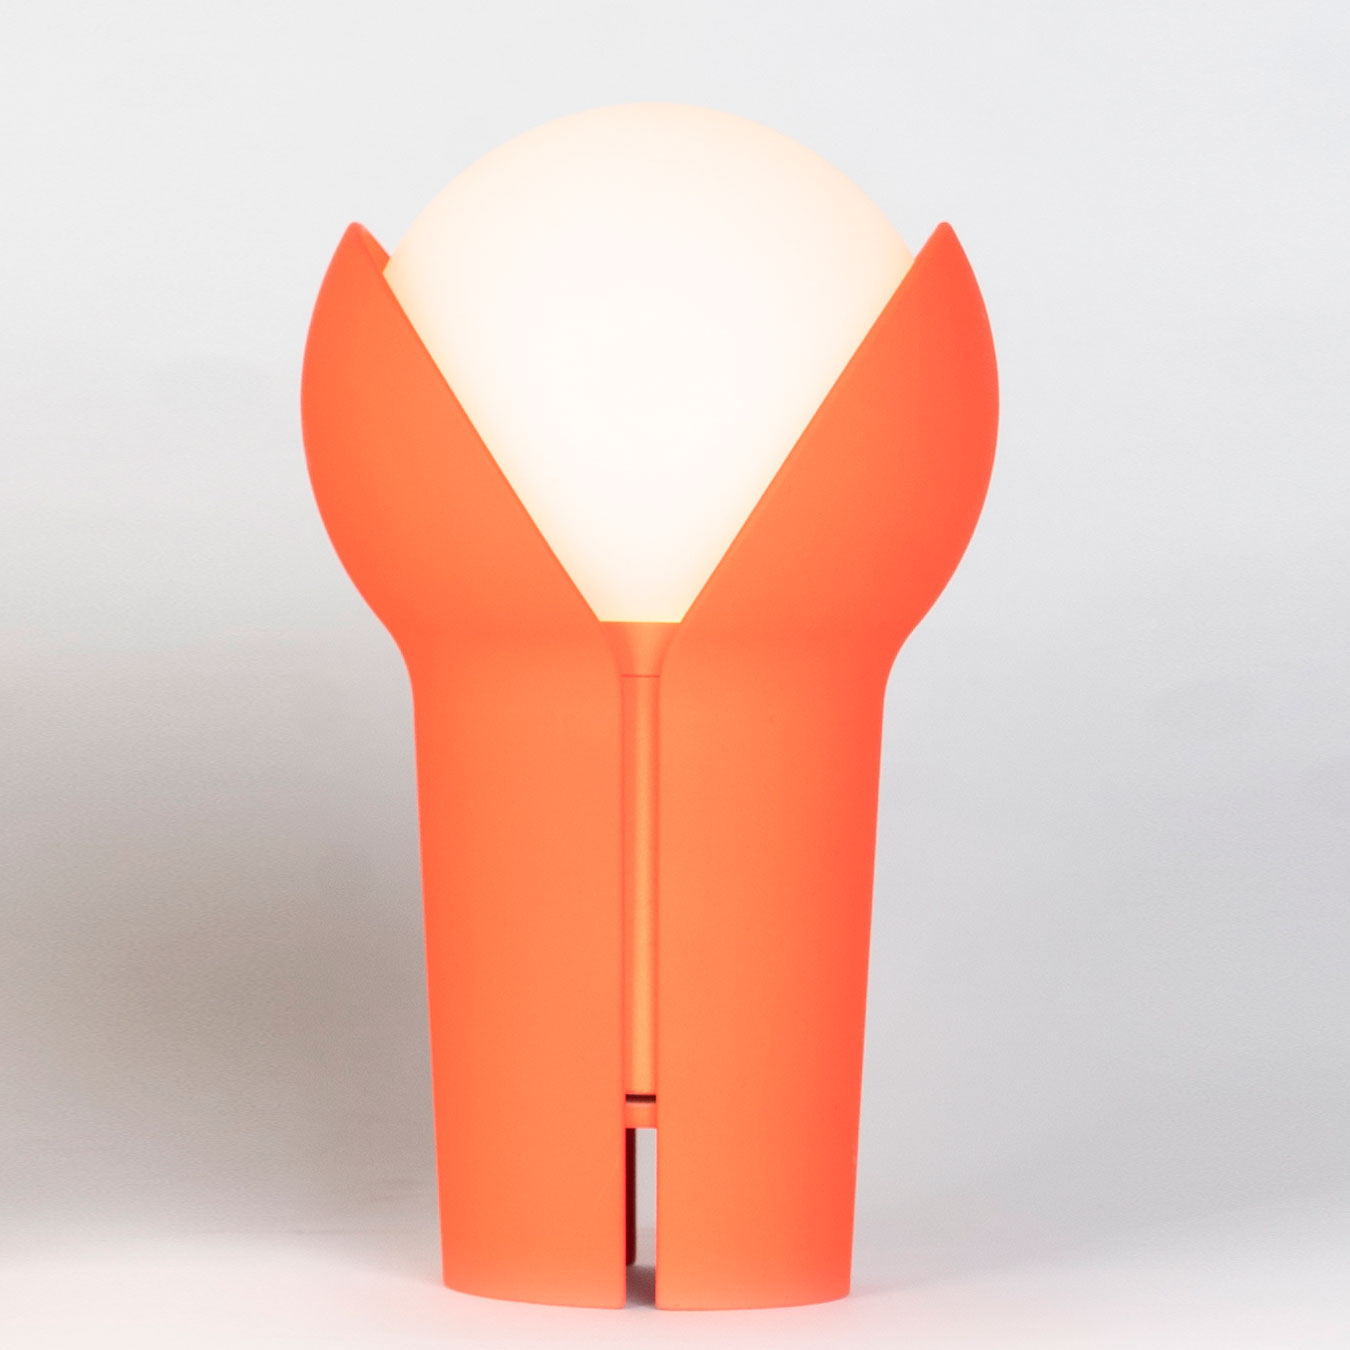 Innermost Bud Portable Lamp